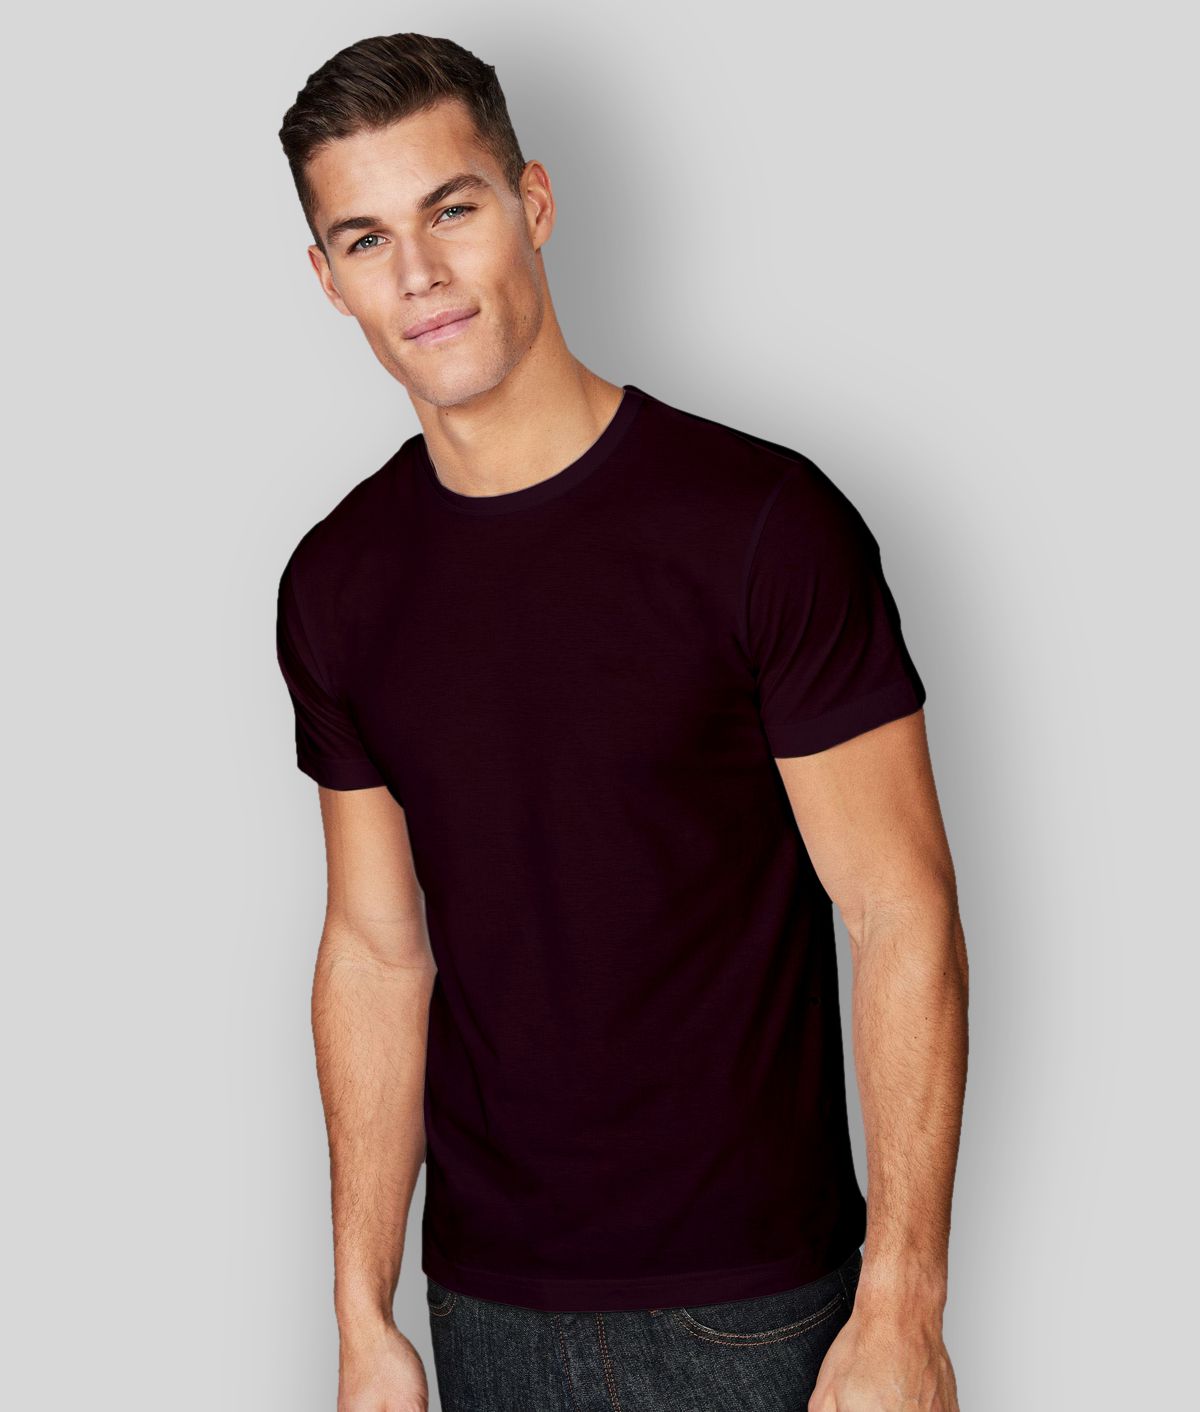     			ESPARTO - Wine Cotton Regular Fit Men's T-Shirt ( Pack of 1 )